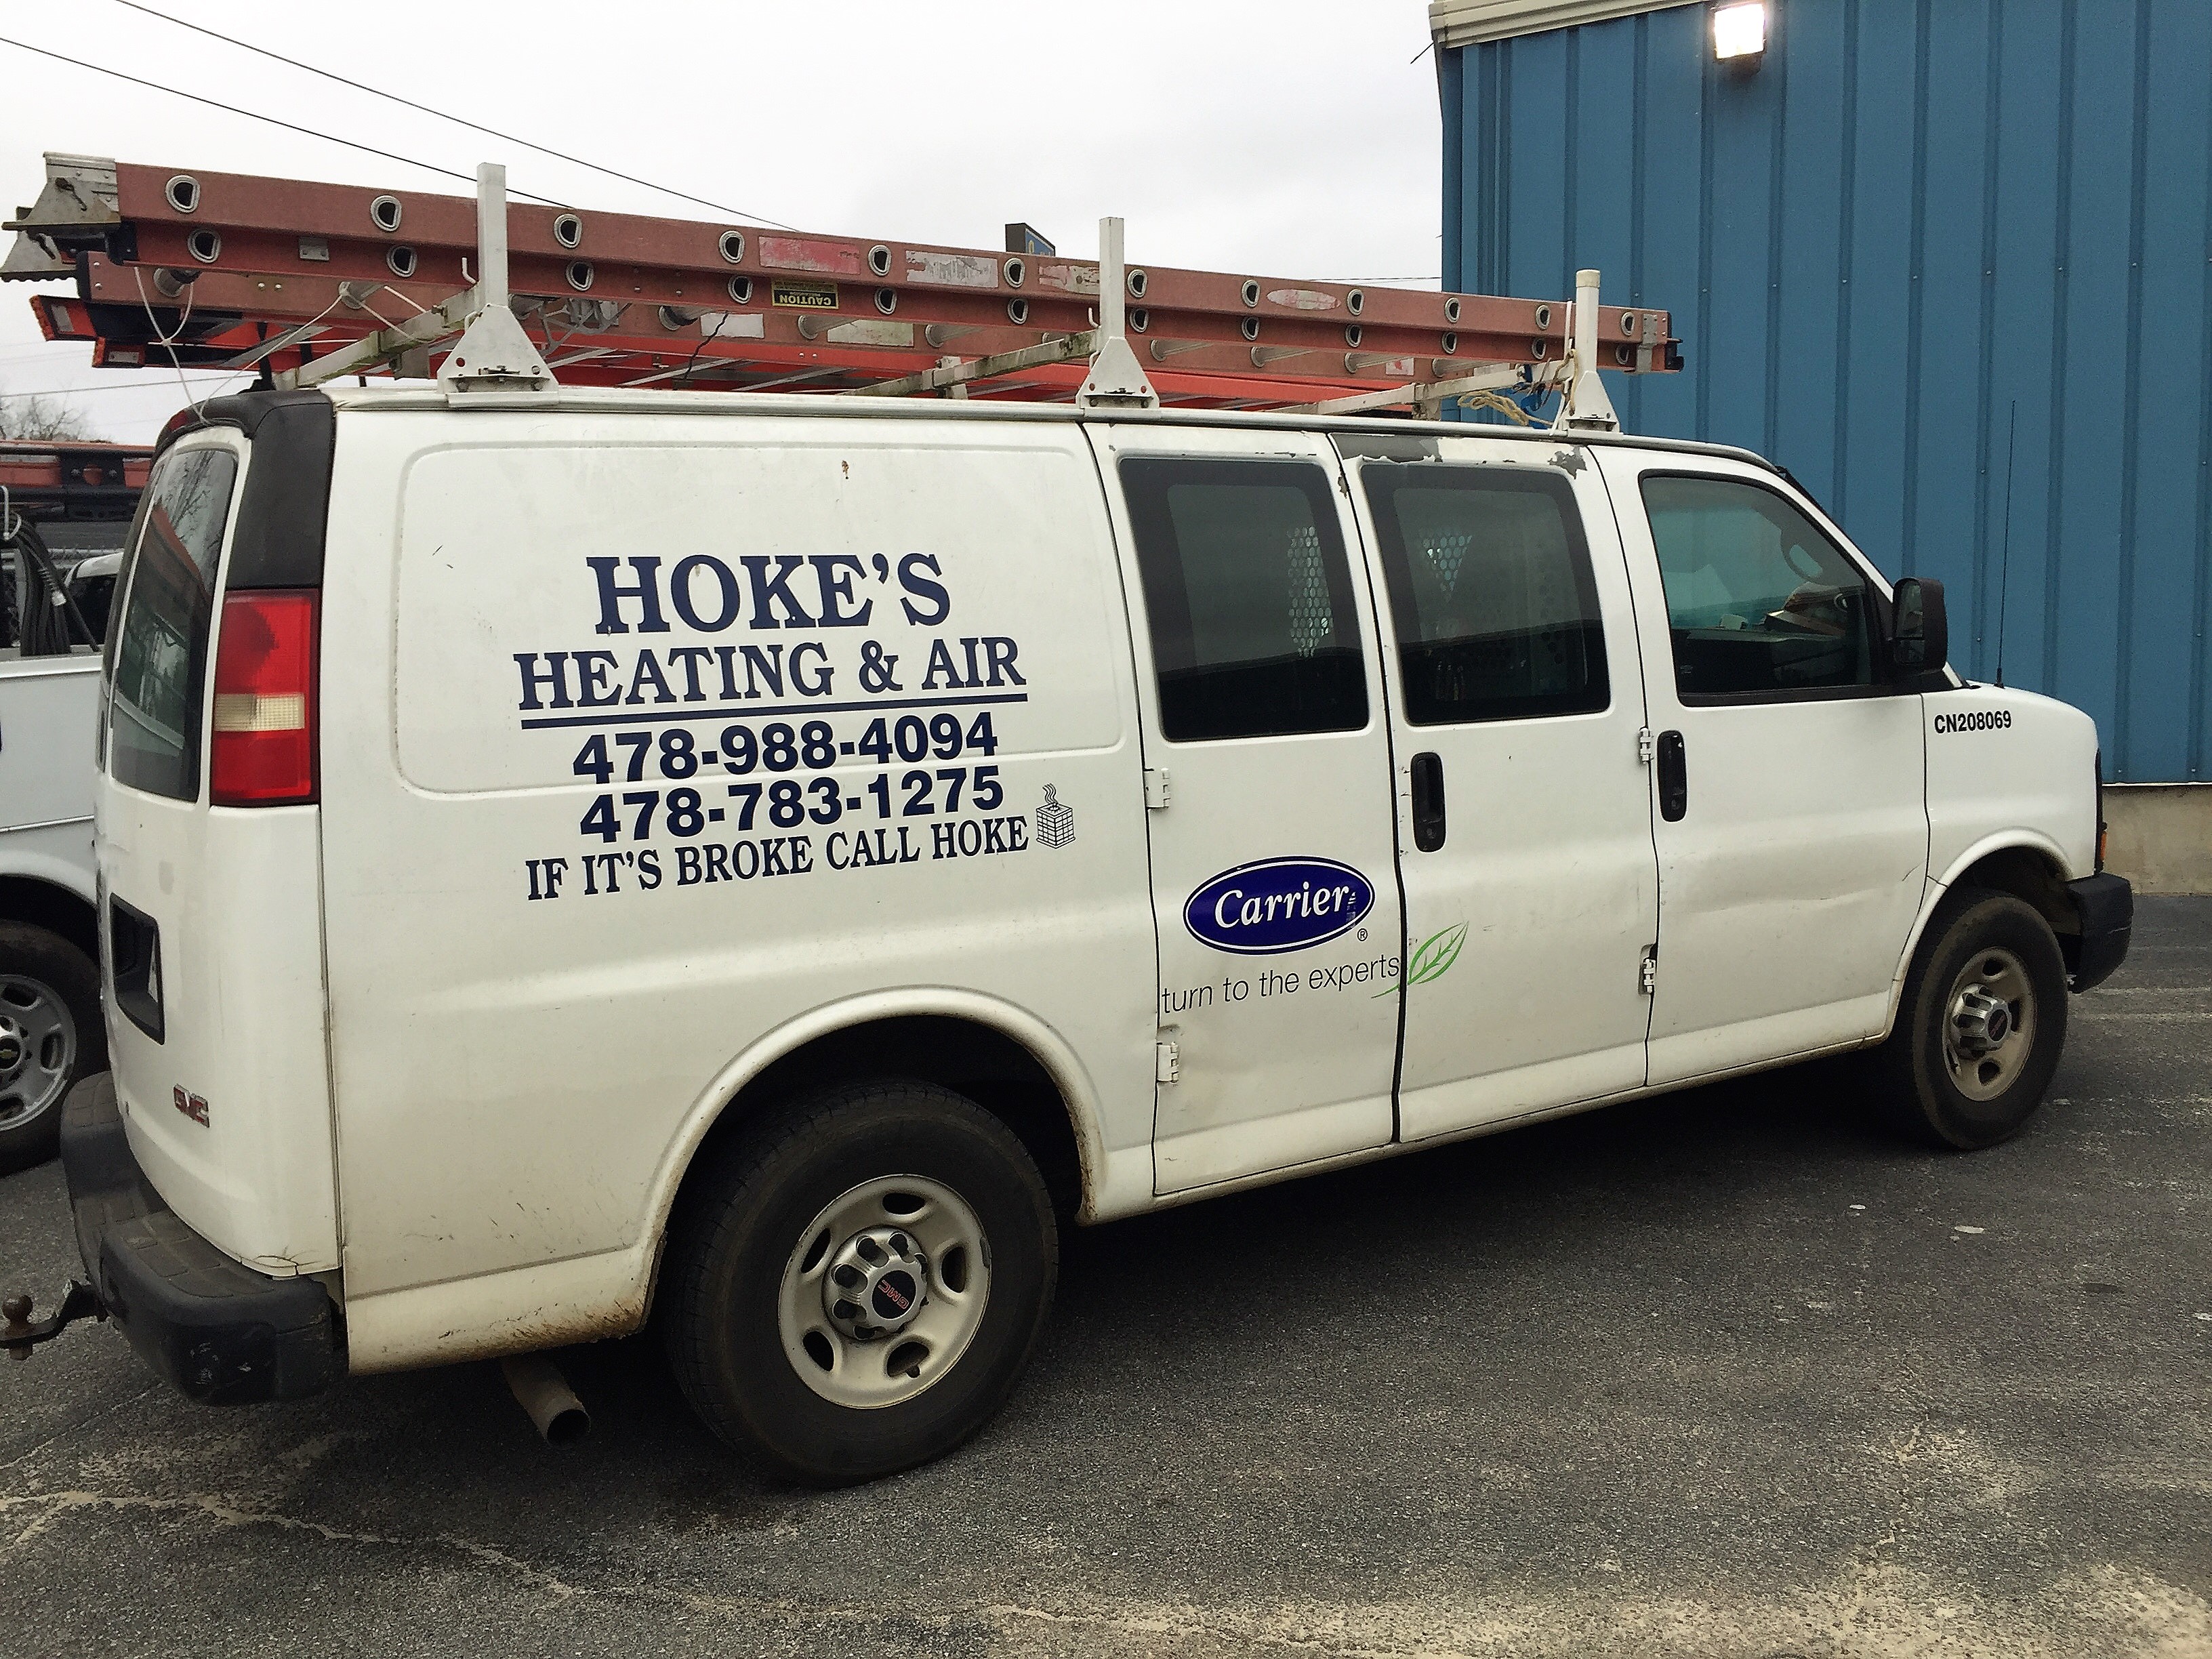 Hoke's Heating and Air company van